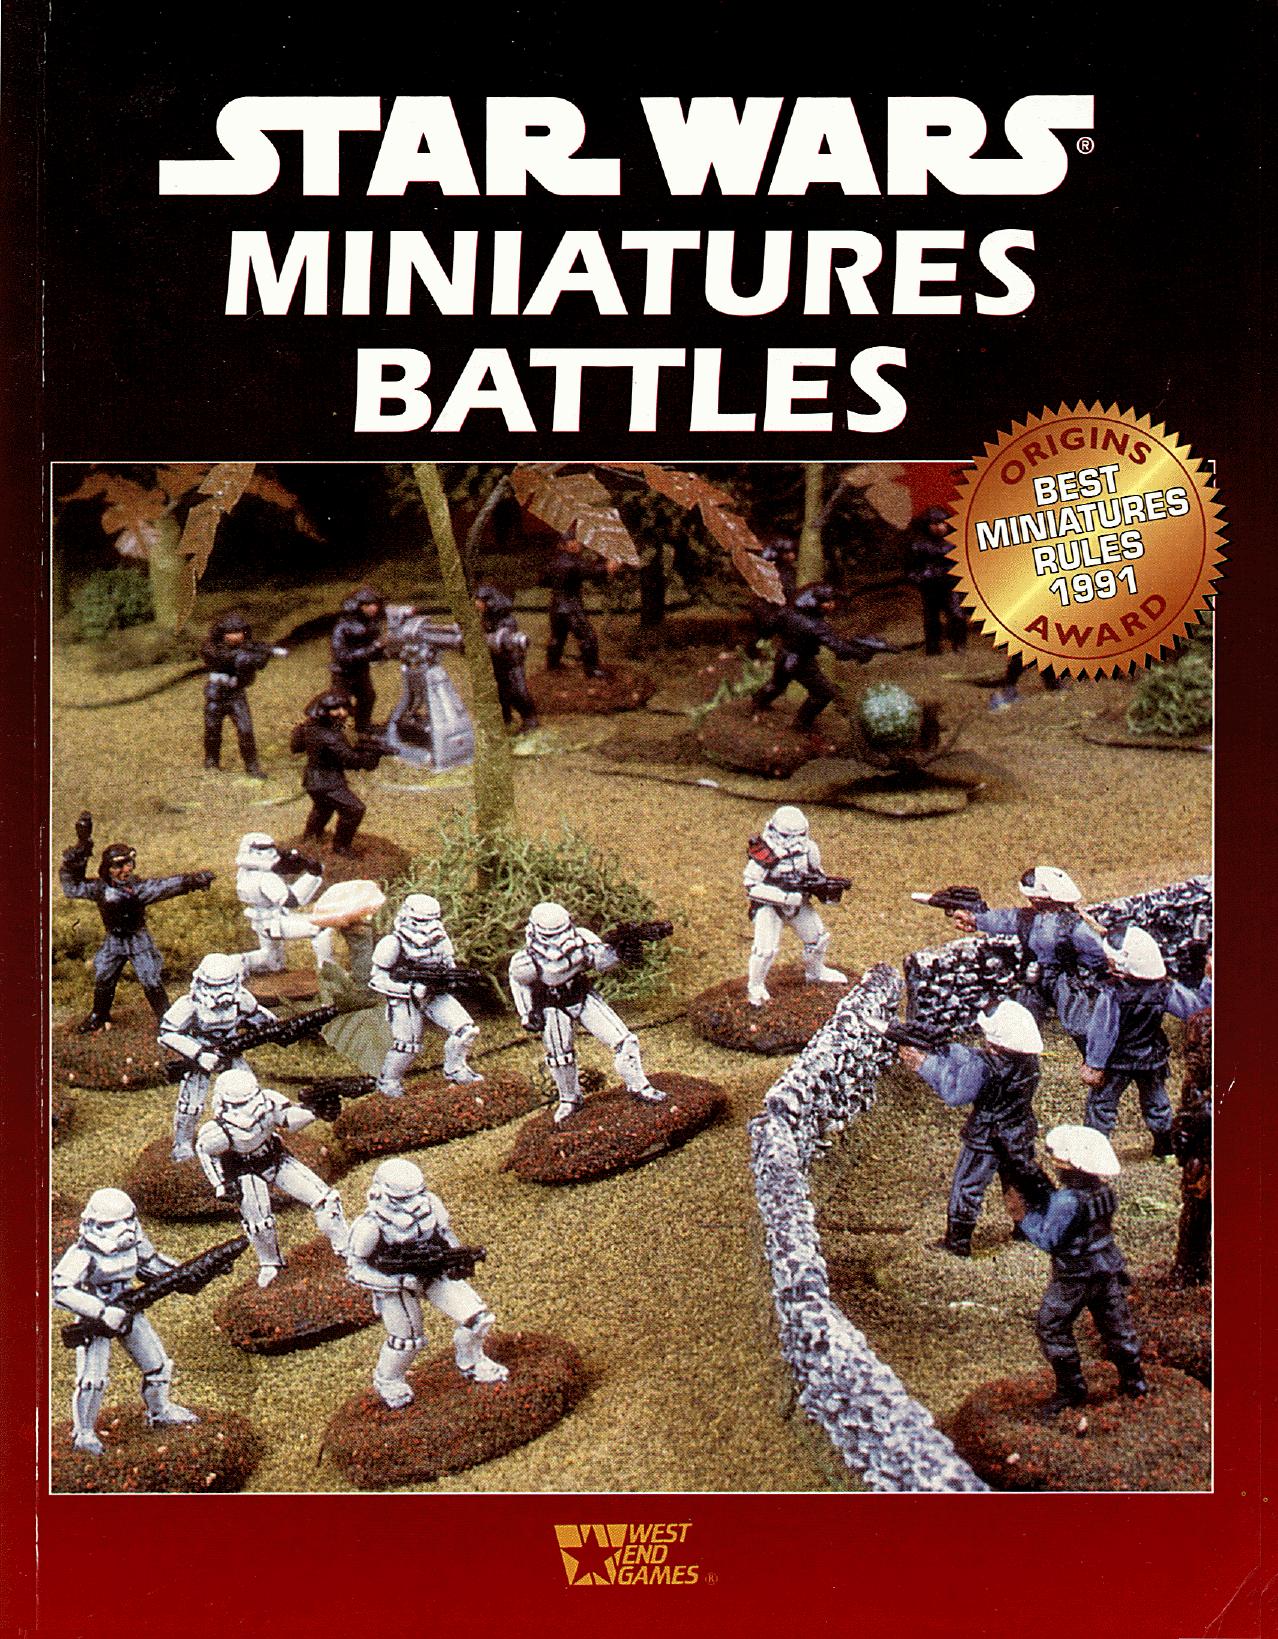 Star Wars Miniature Battles